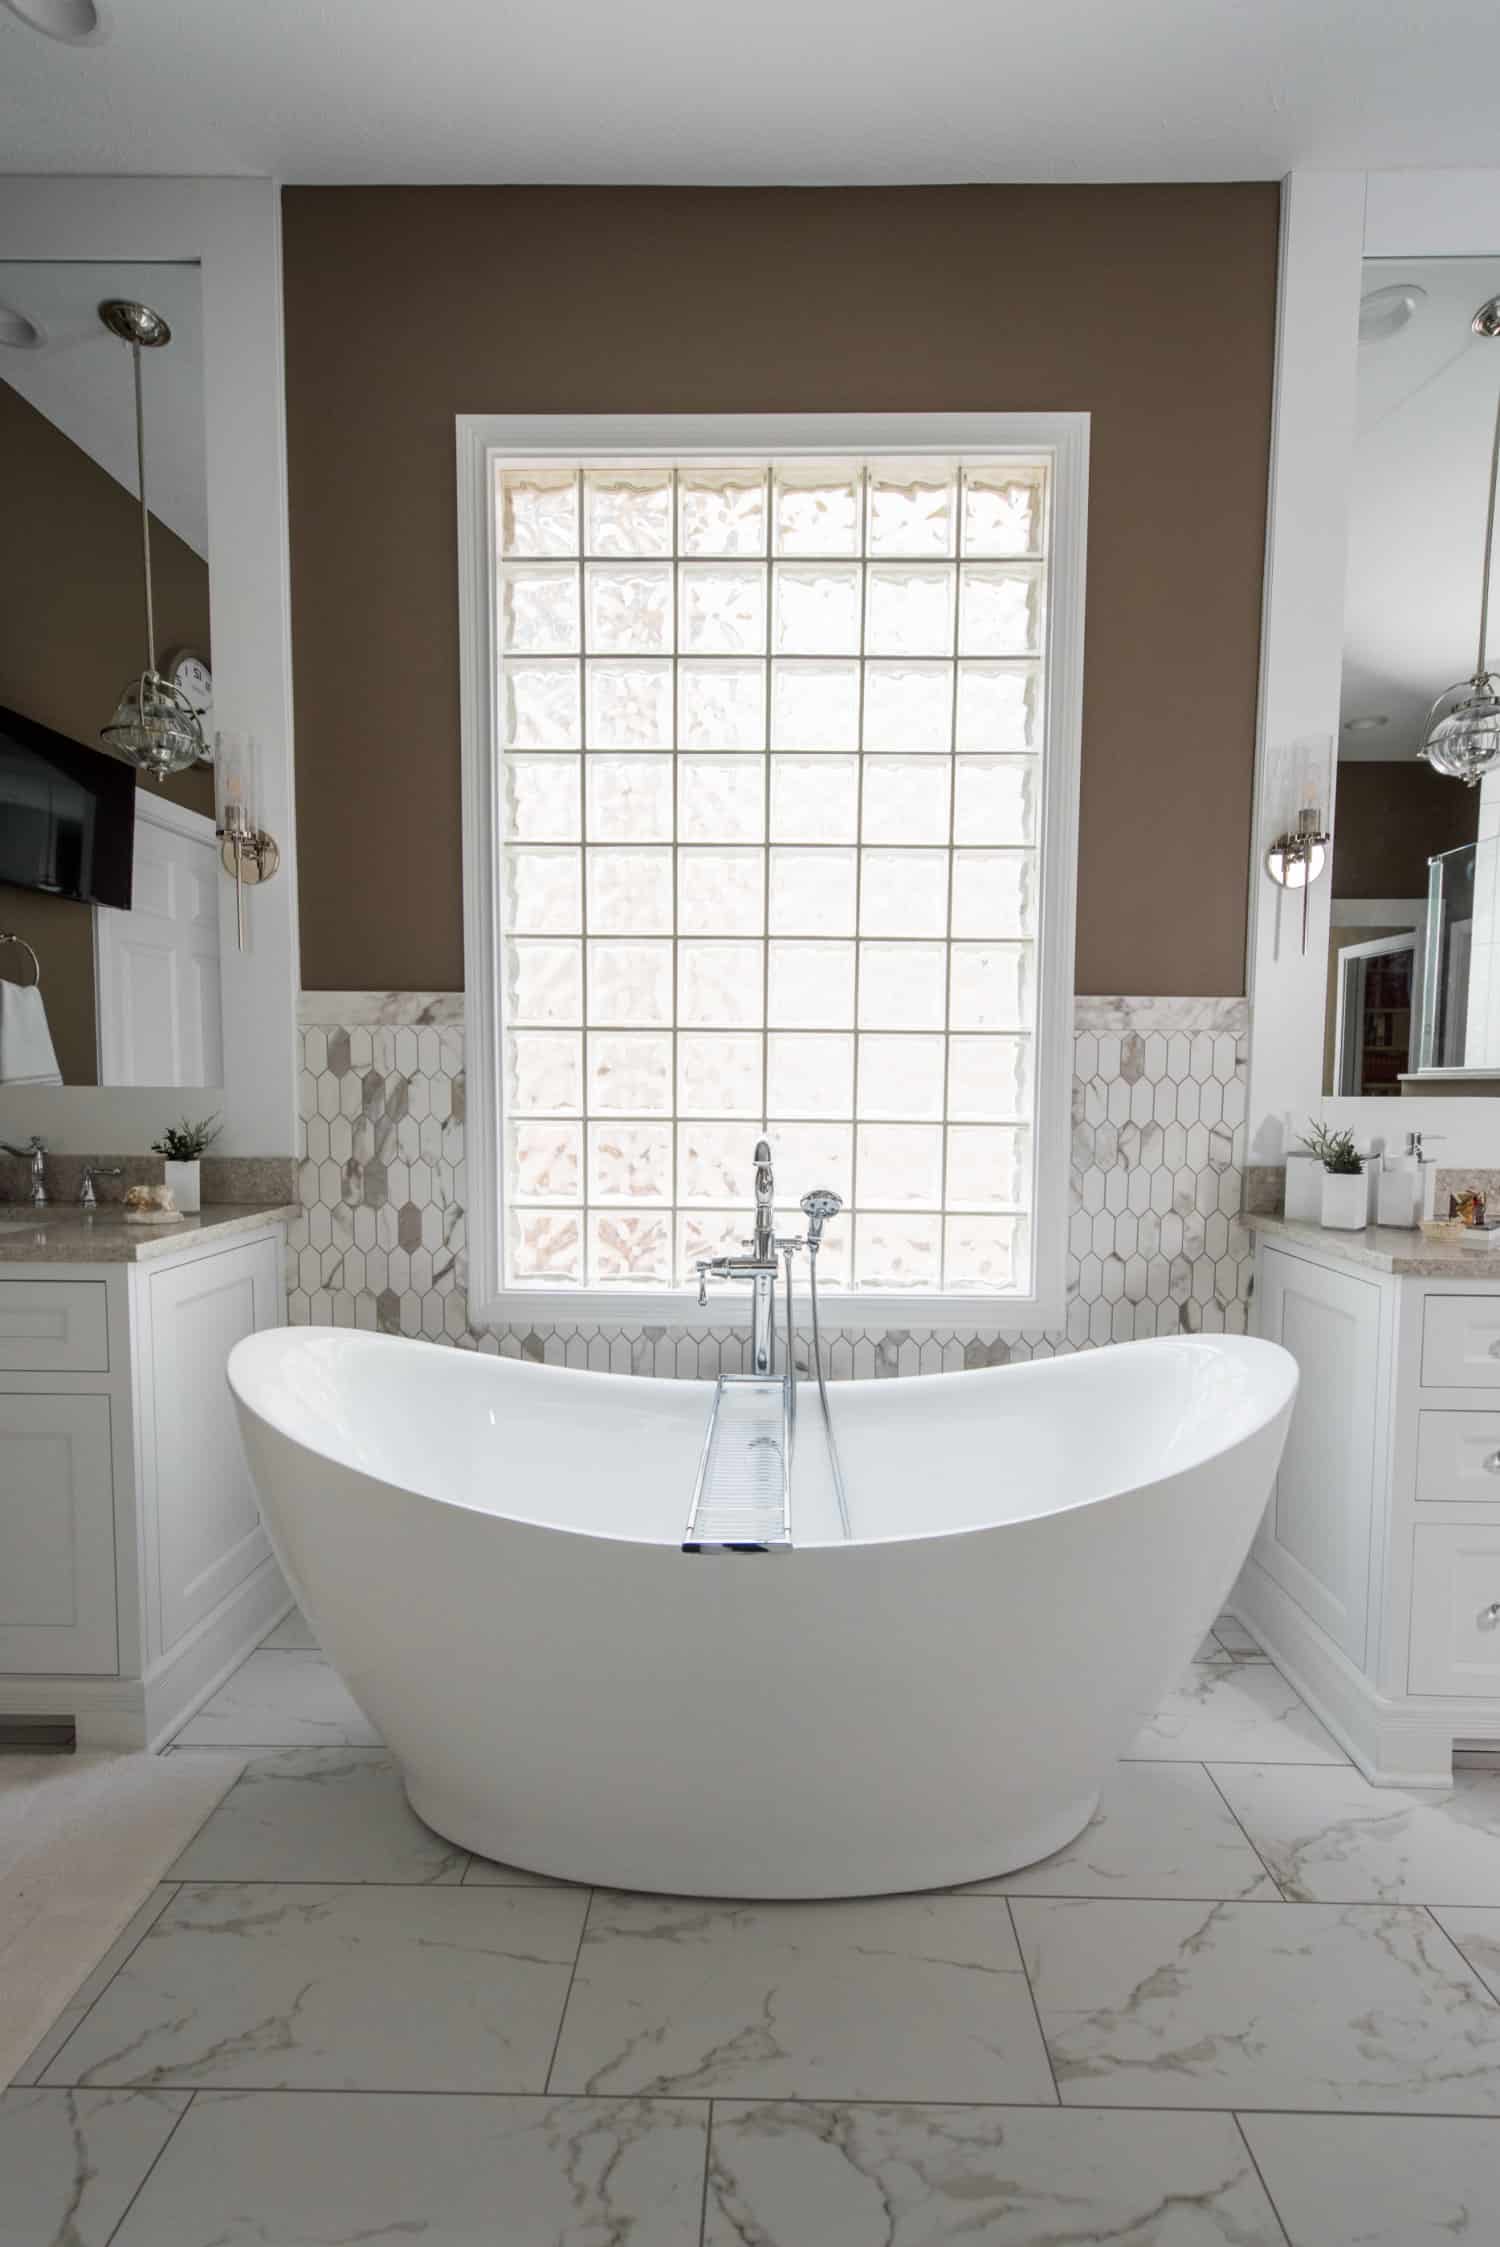 Nicholas Design Build | An oasis-like bathroom featuring a large tub and a window.